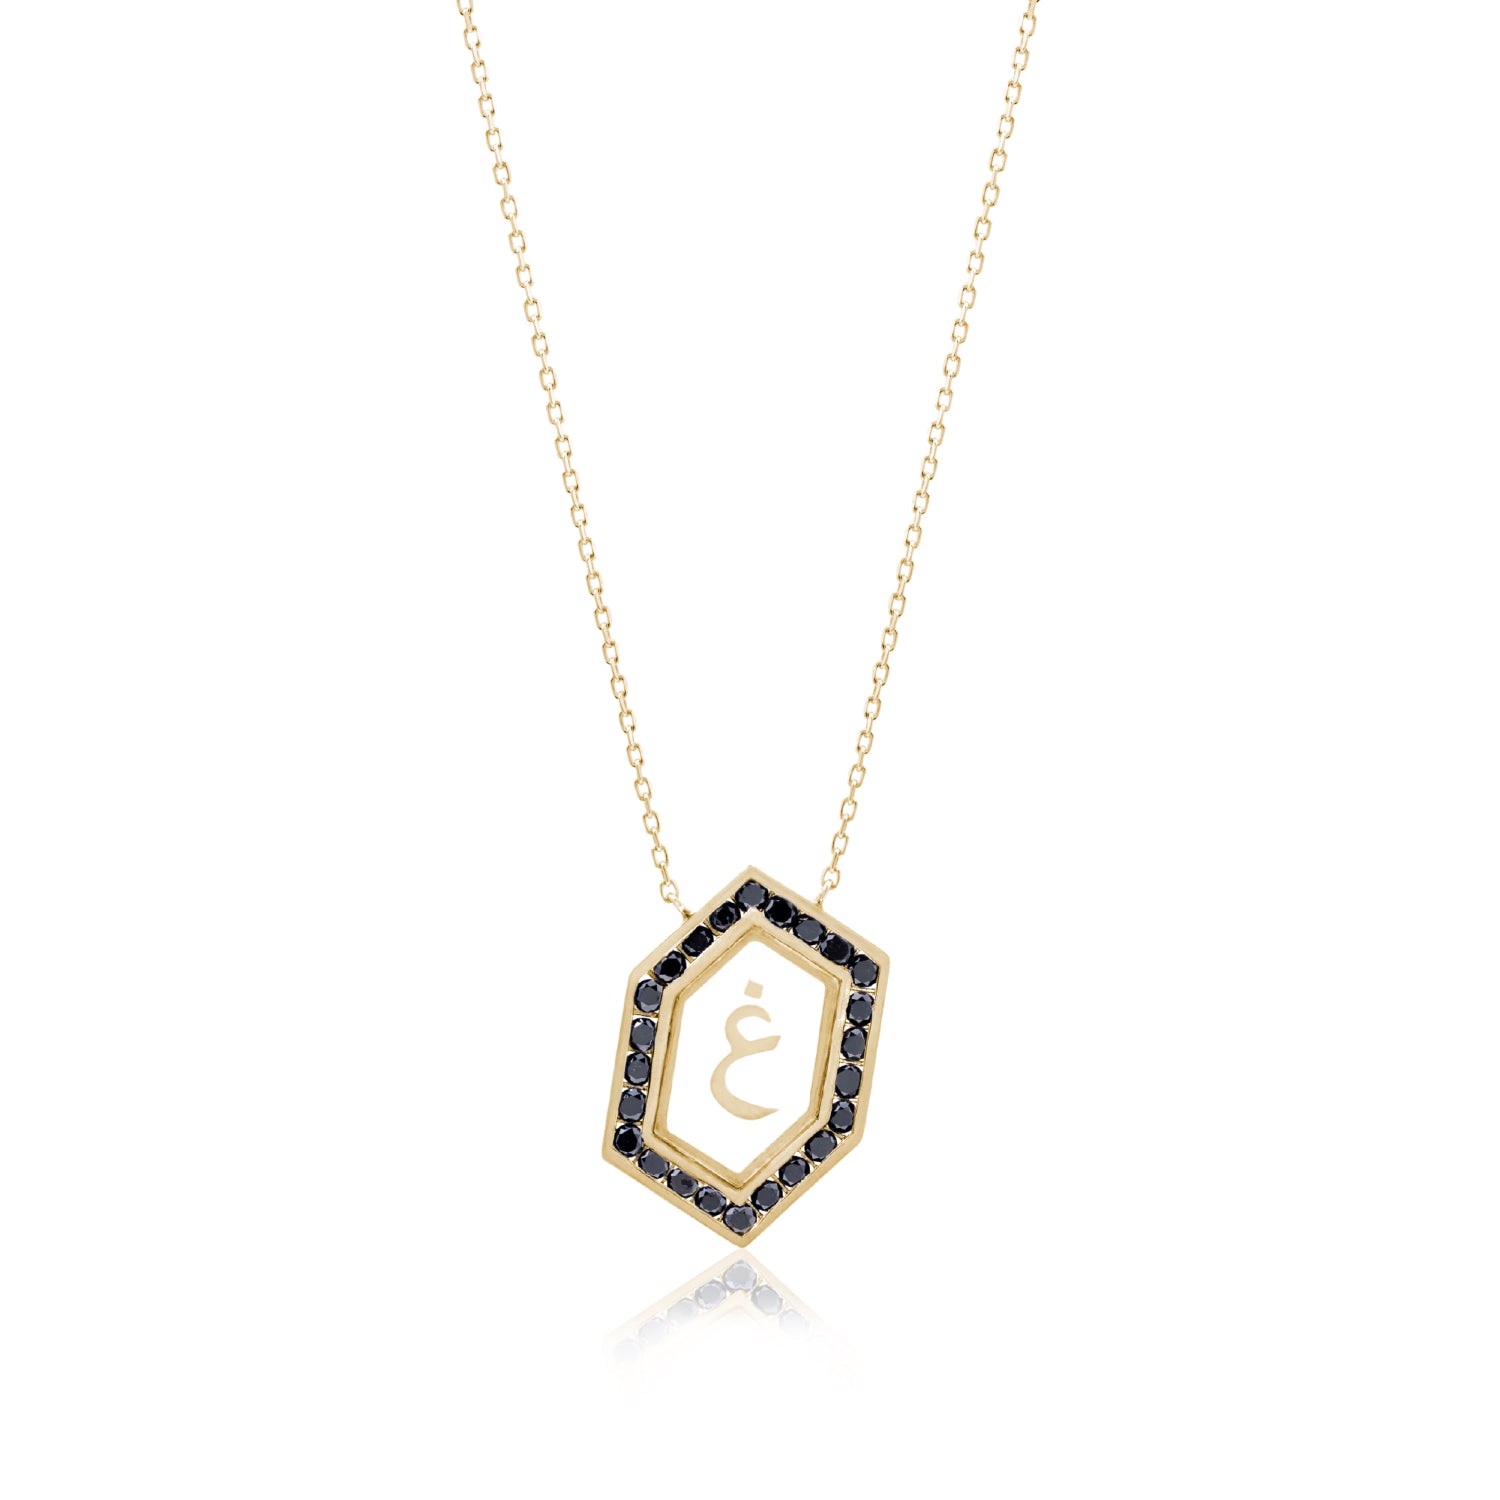 Qamoos 1.0 Letter غ Black Diamond Necklace in Yellow Gold